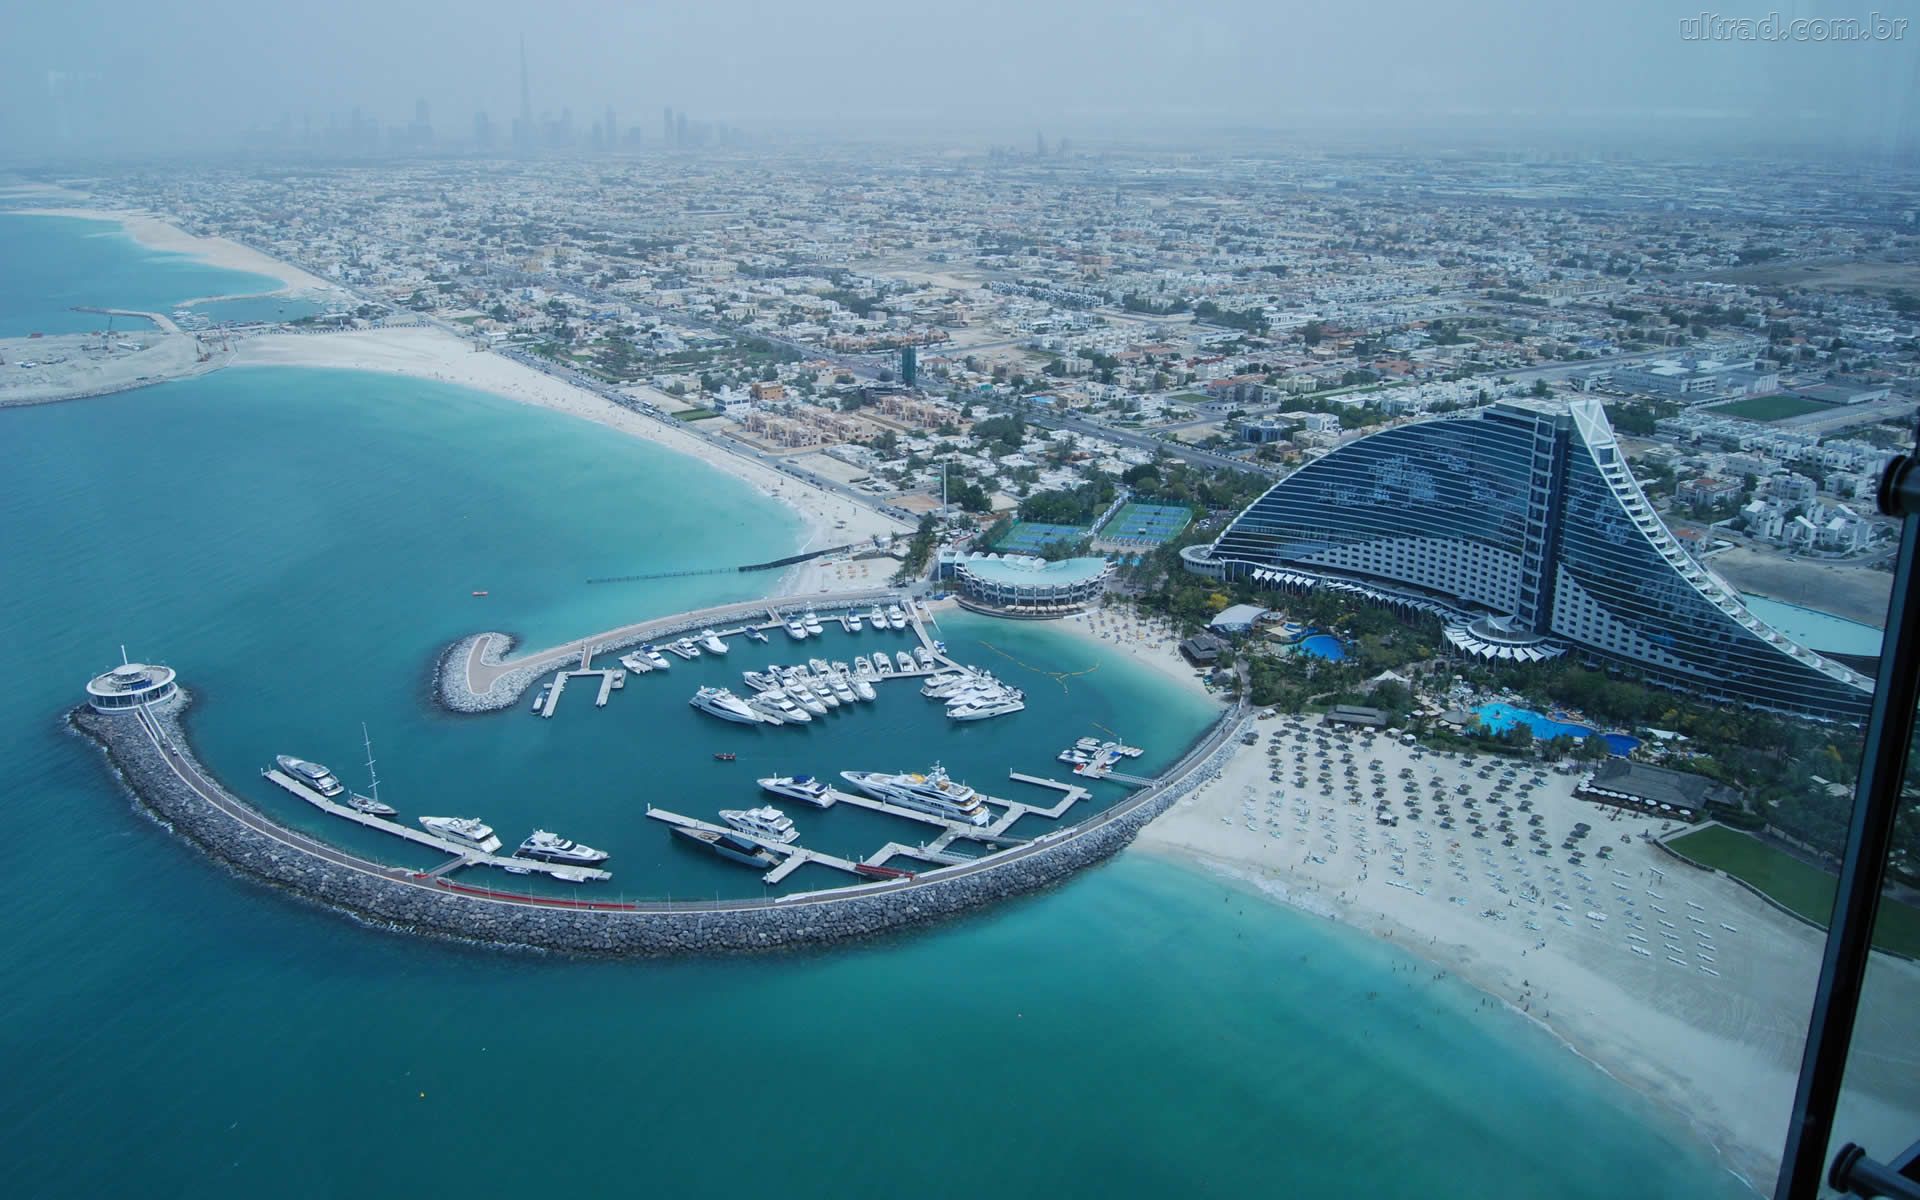 Pin Dubai Jumeirah Beach Wallpaper Hd Quality Background Picture on